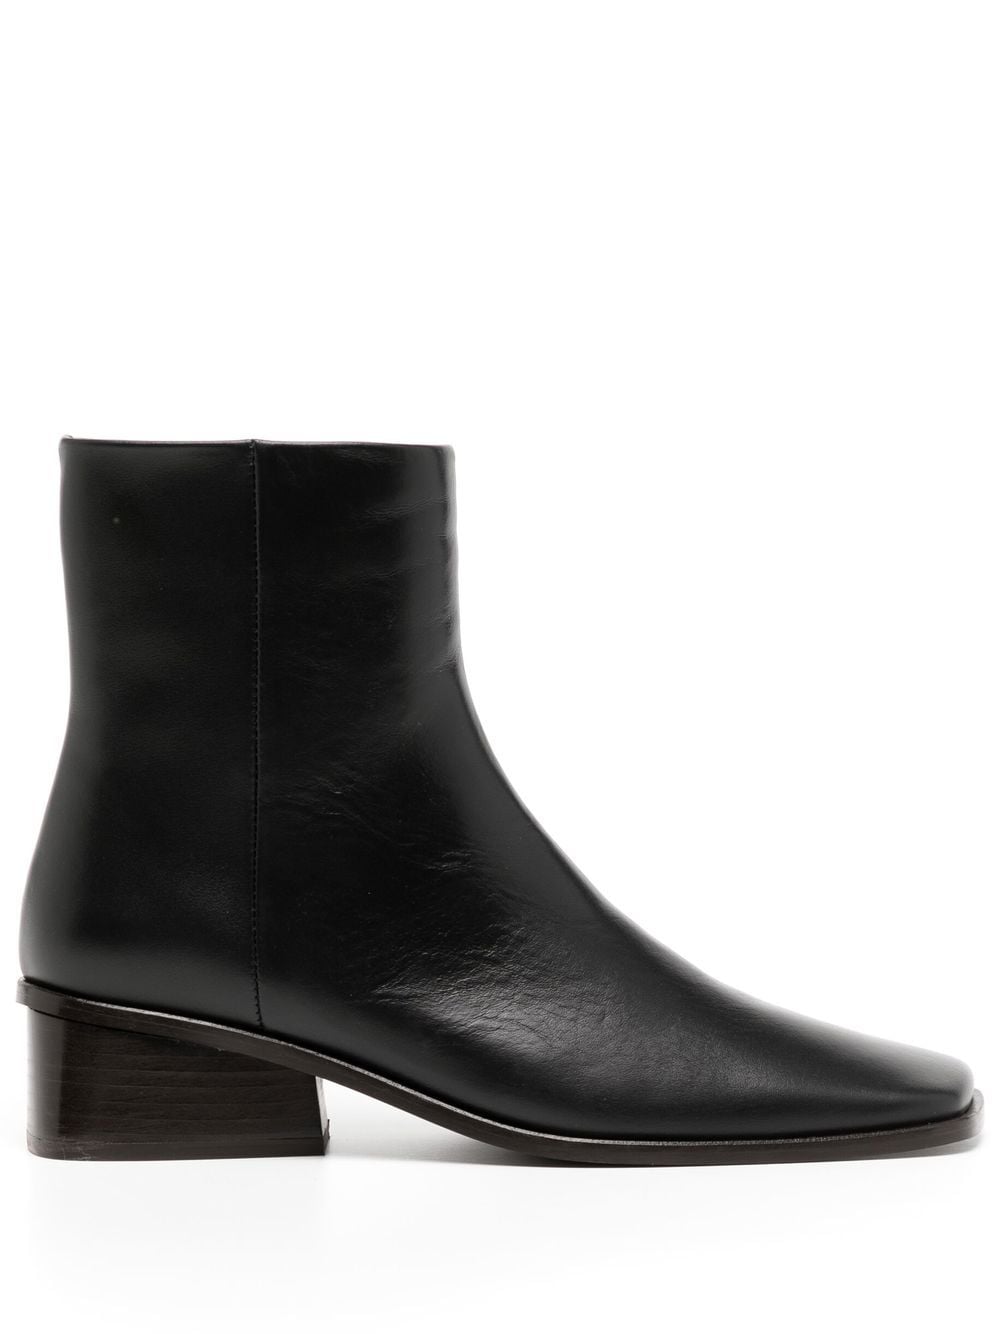 Rejina Pyo Rise leather ankle boots - Black von Rejina Pyo